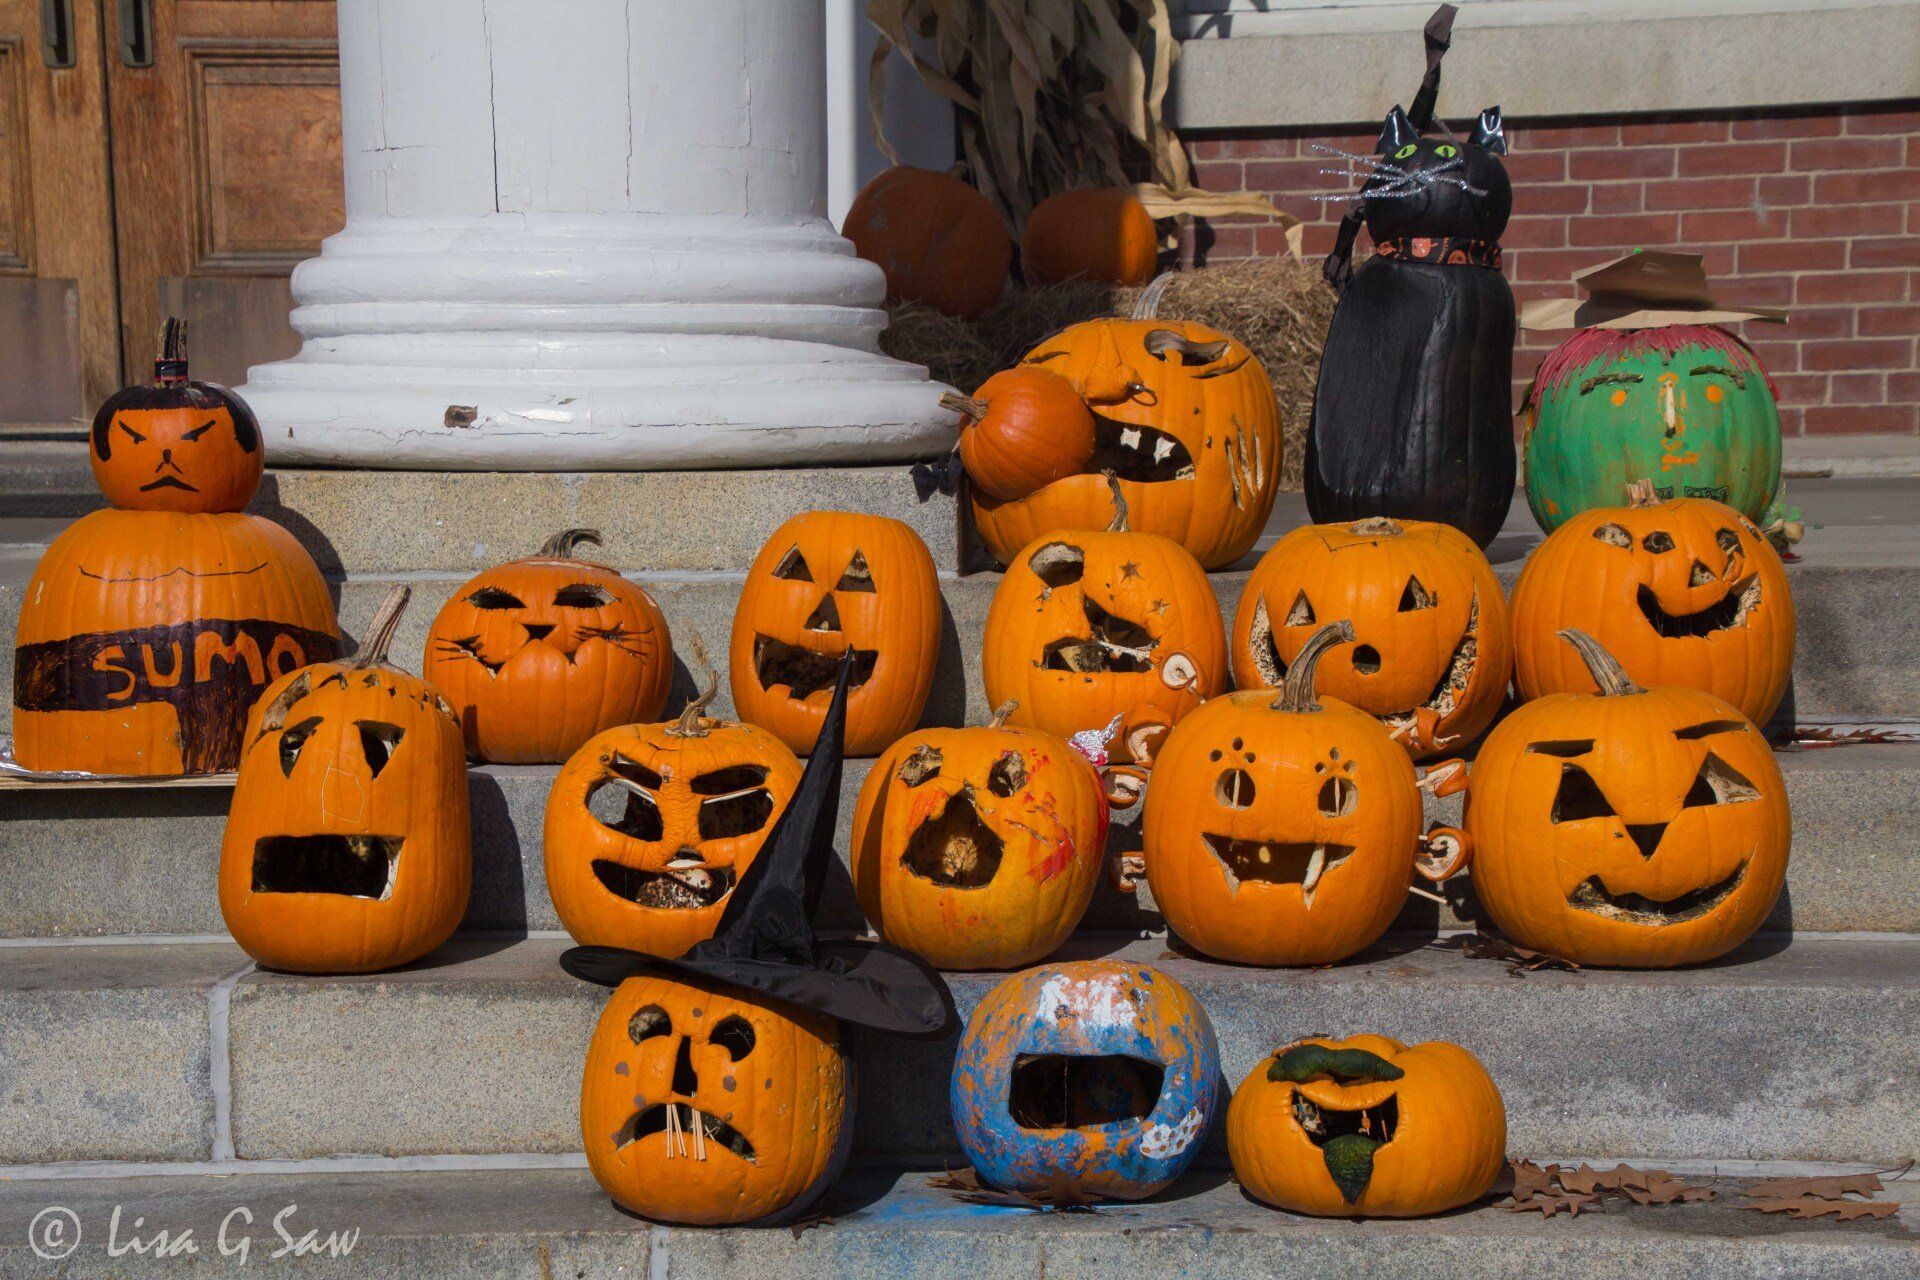 Collection of carved pumpkins on steps